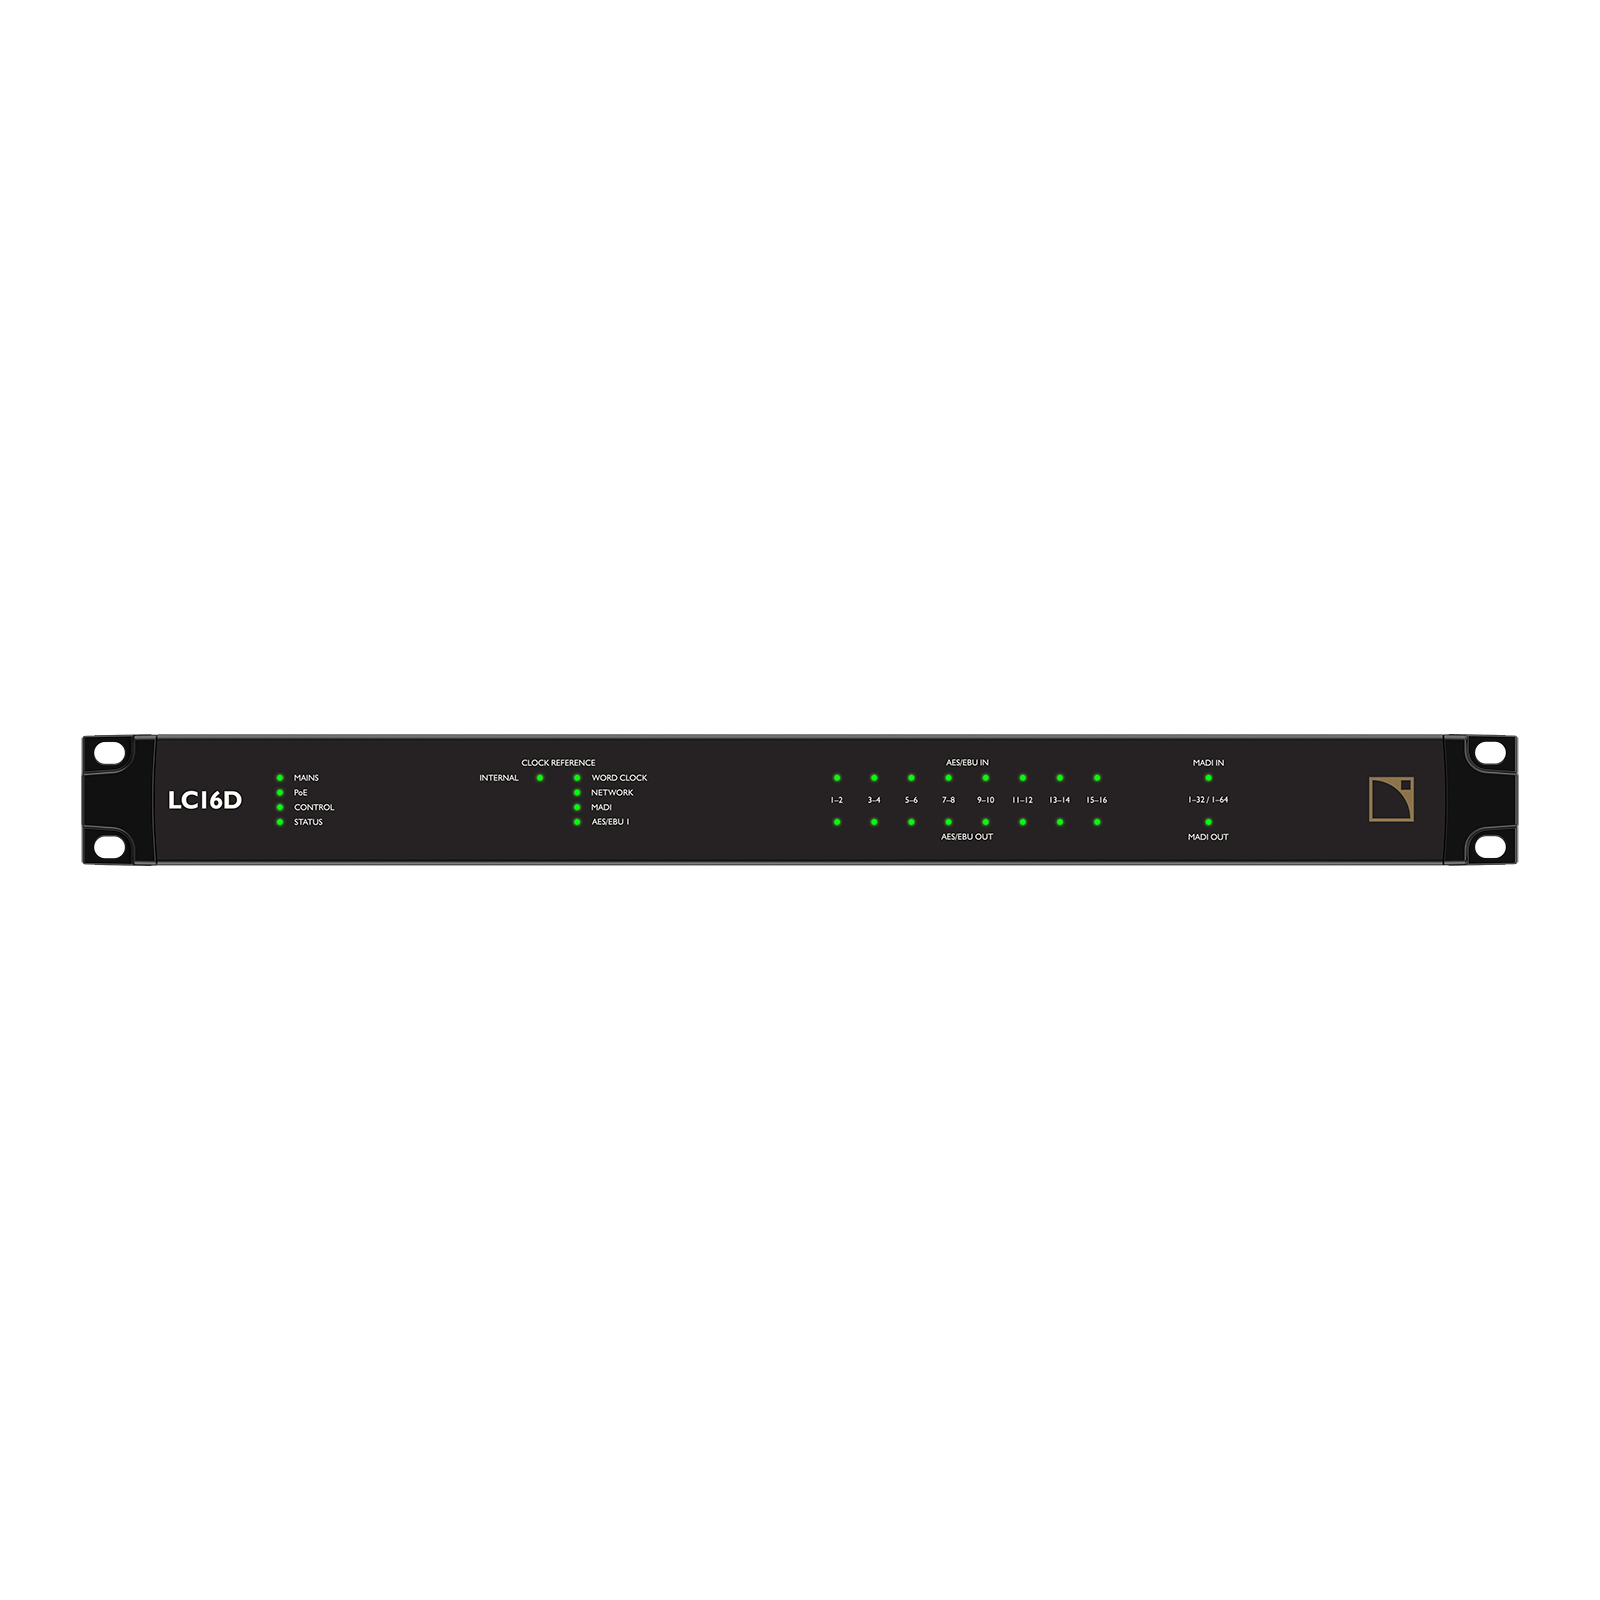 LC16D Front Image - Professional Audio System Format Converter by L-Acoustics